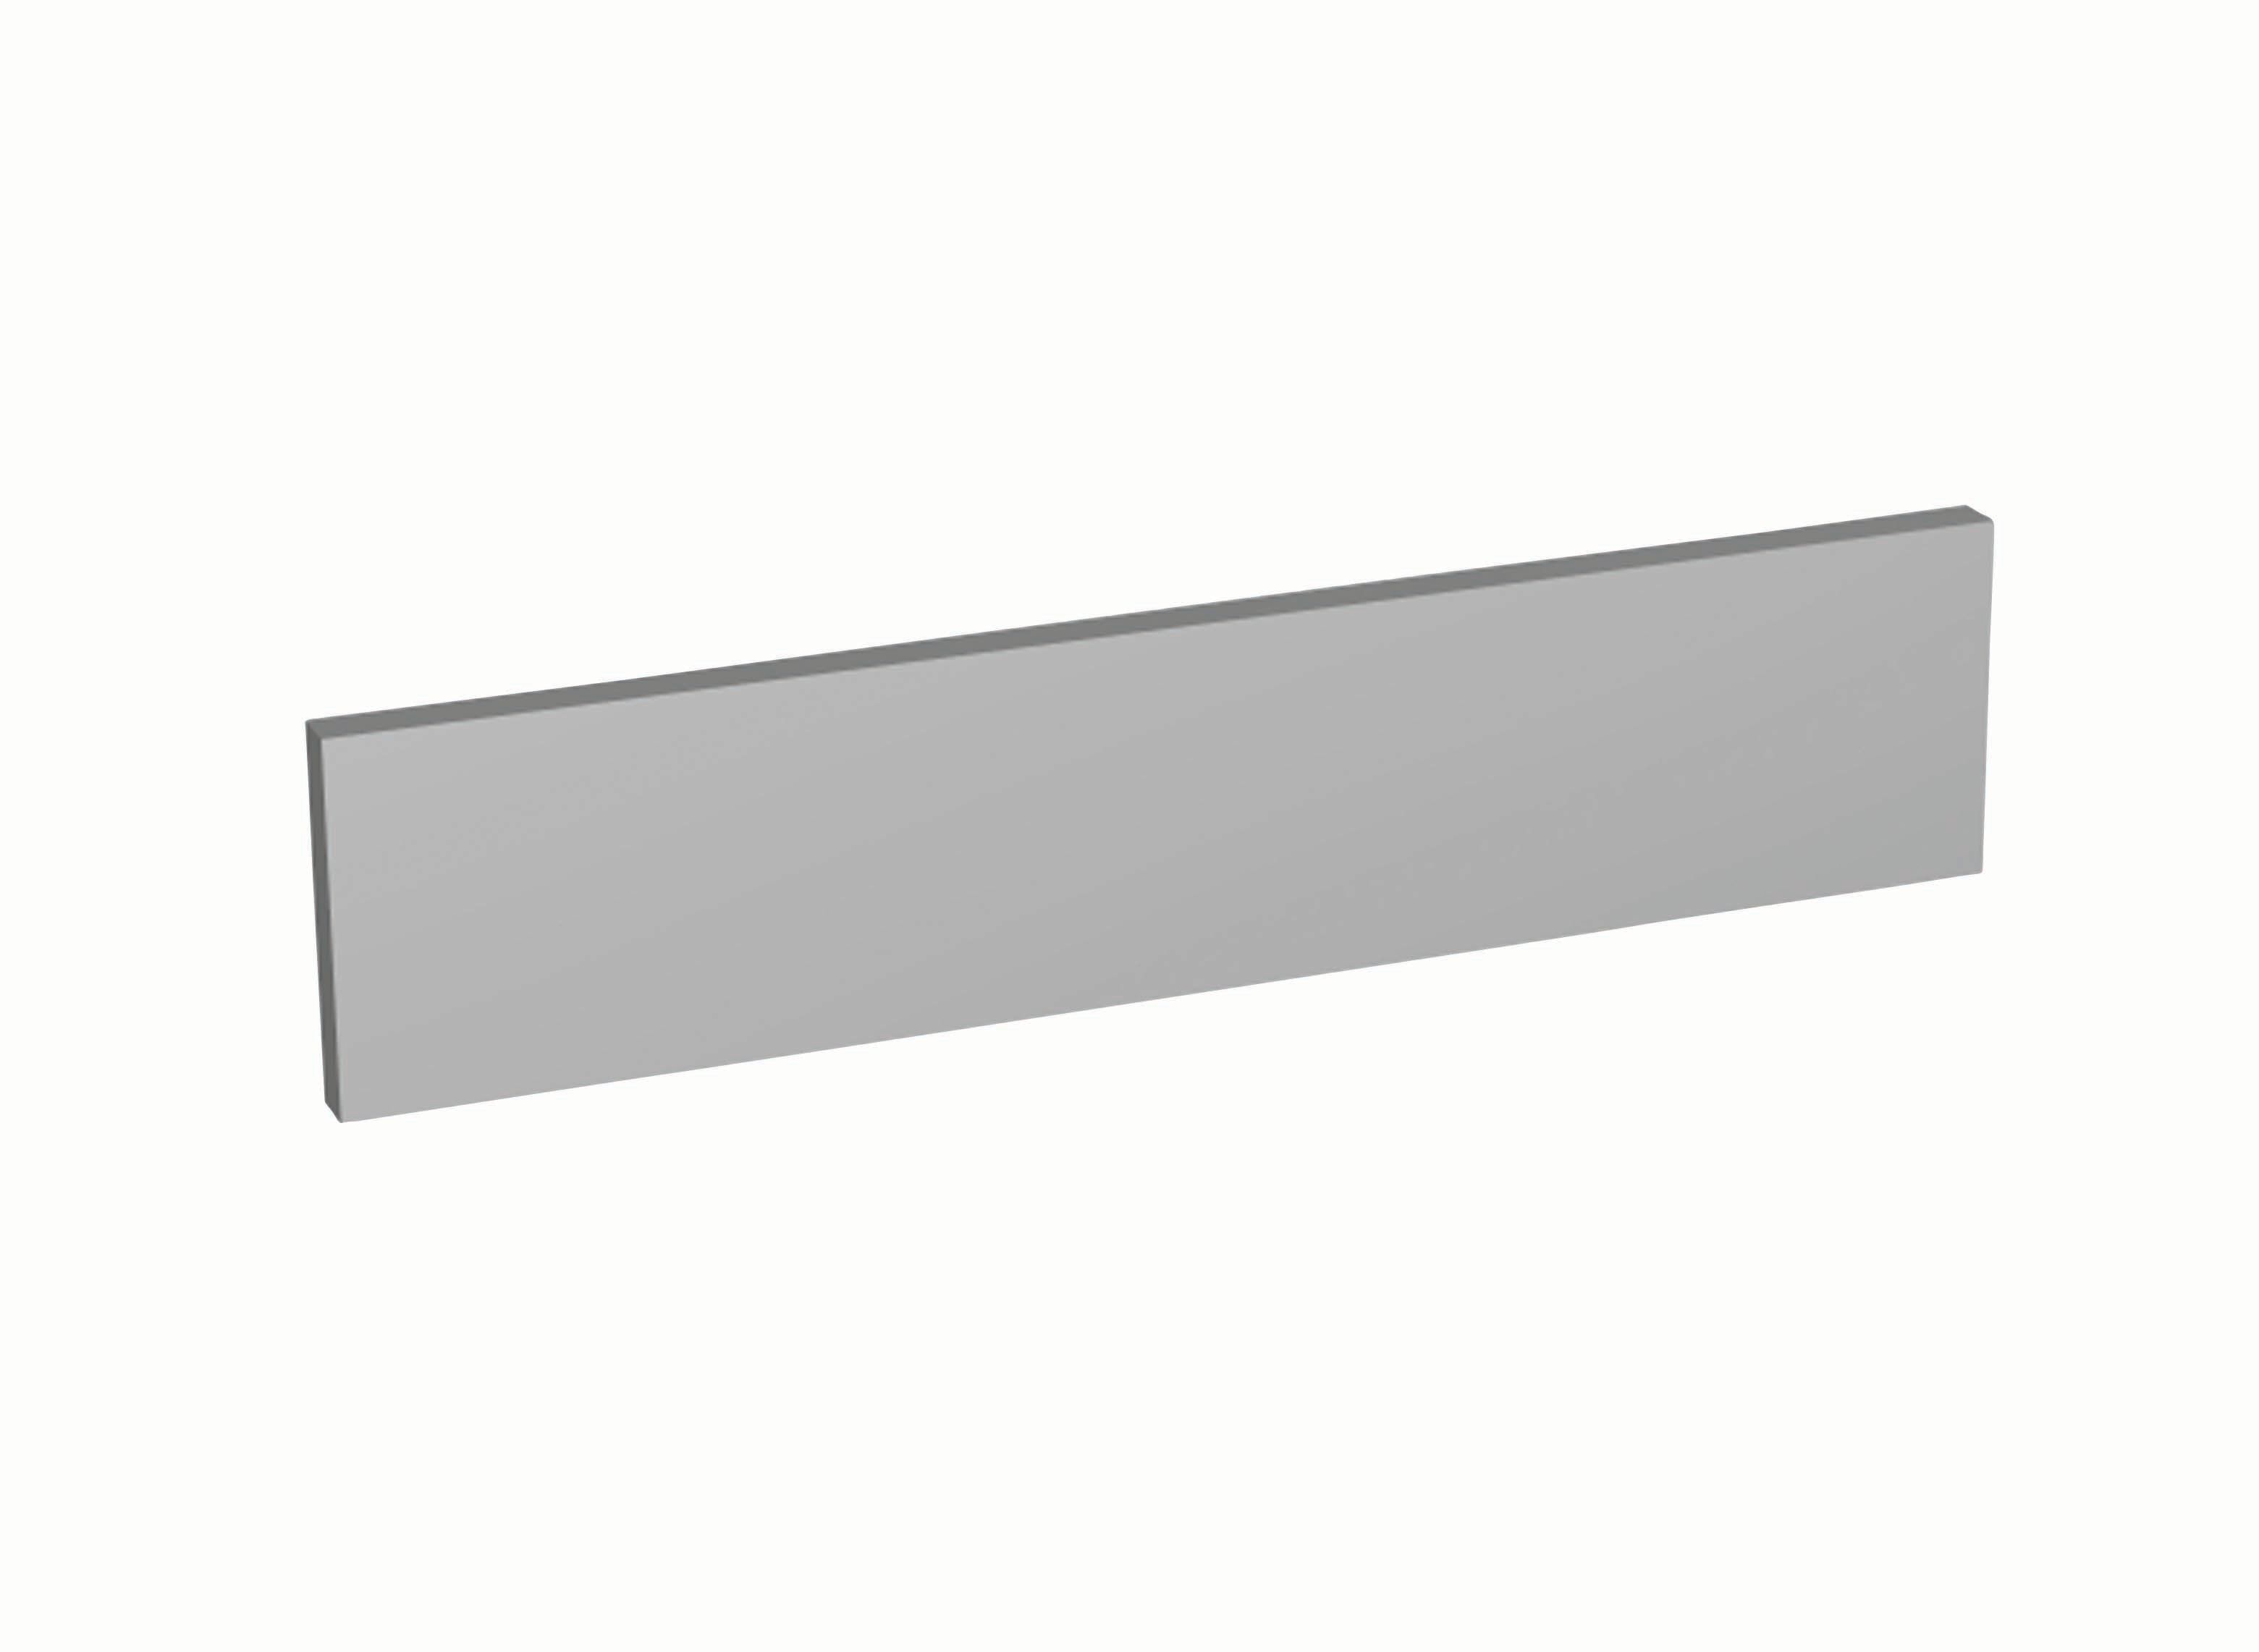 Image of Wickes Madison Grey Gloss Handleless Appliance Door - 600 x 131mm